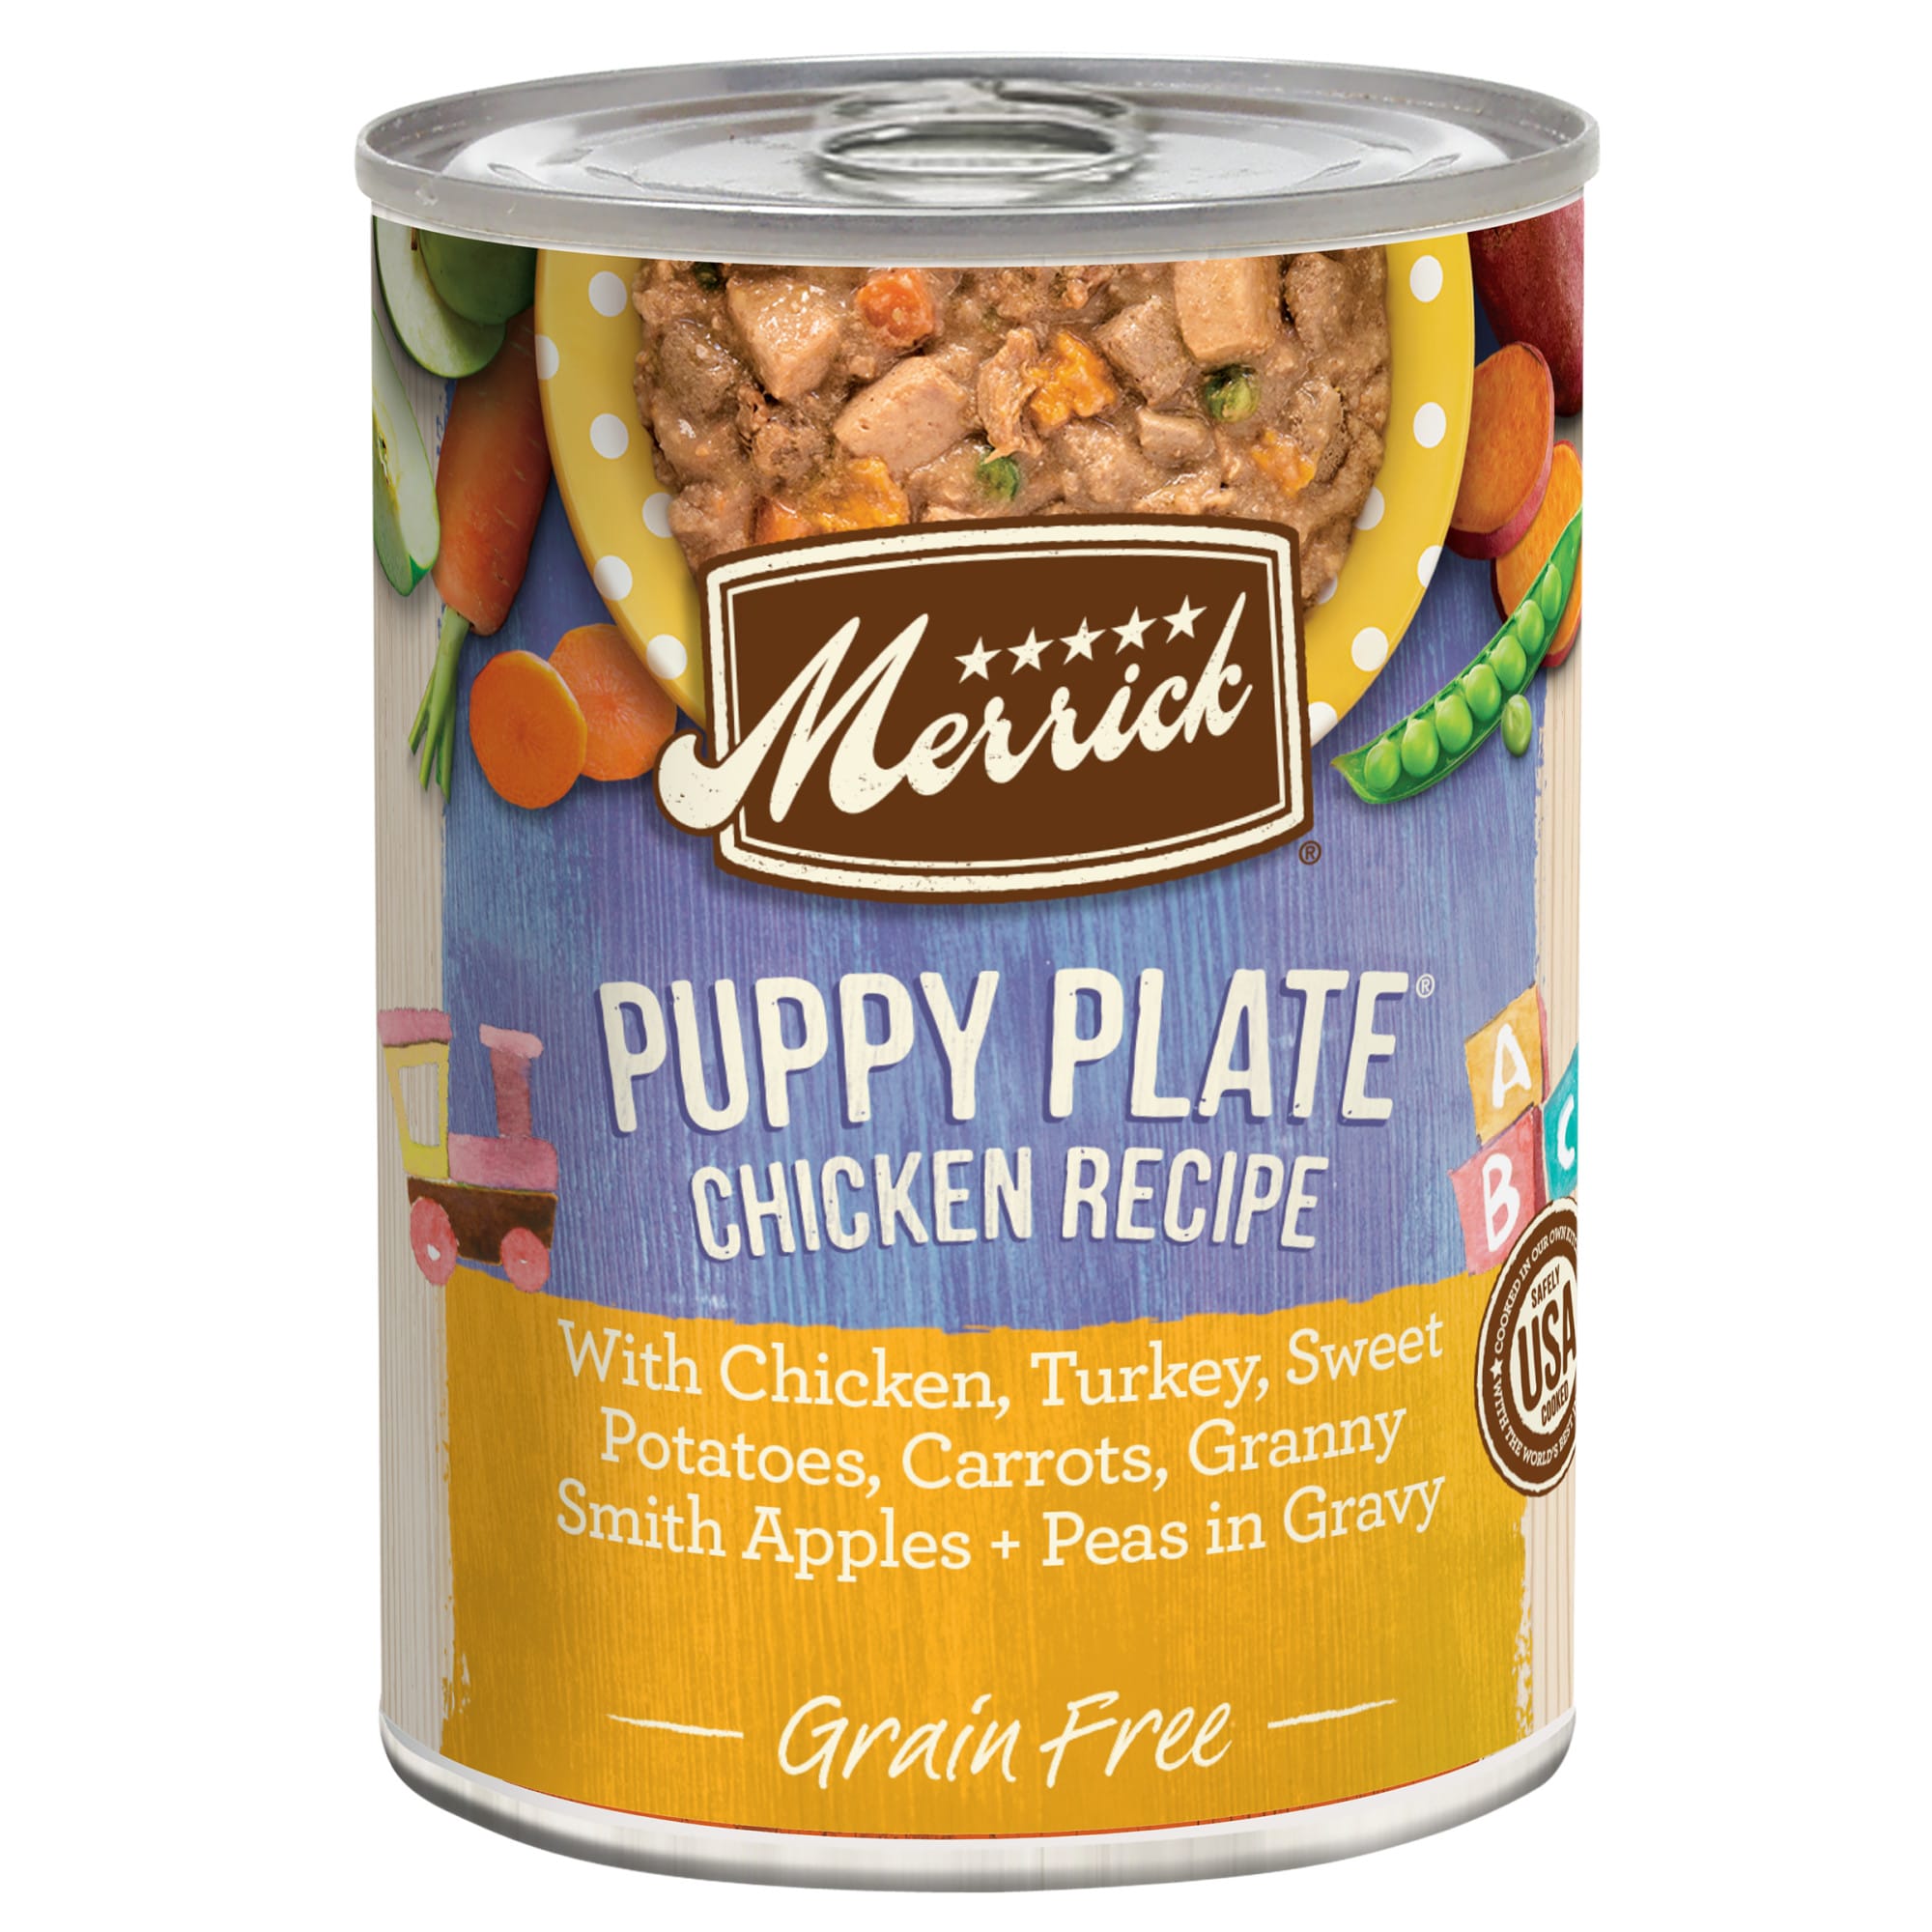 dog food plate